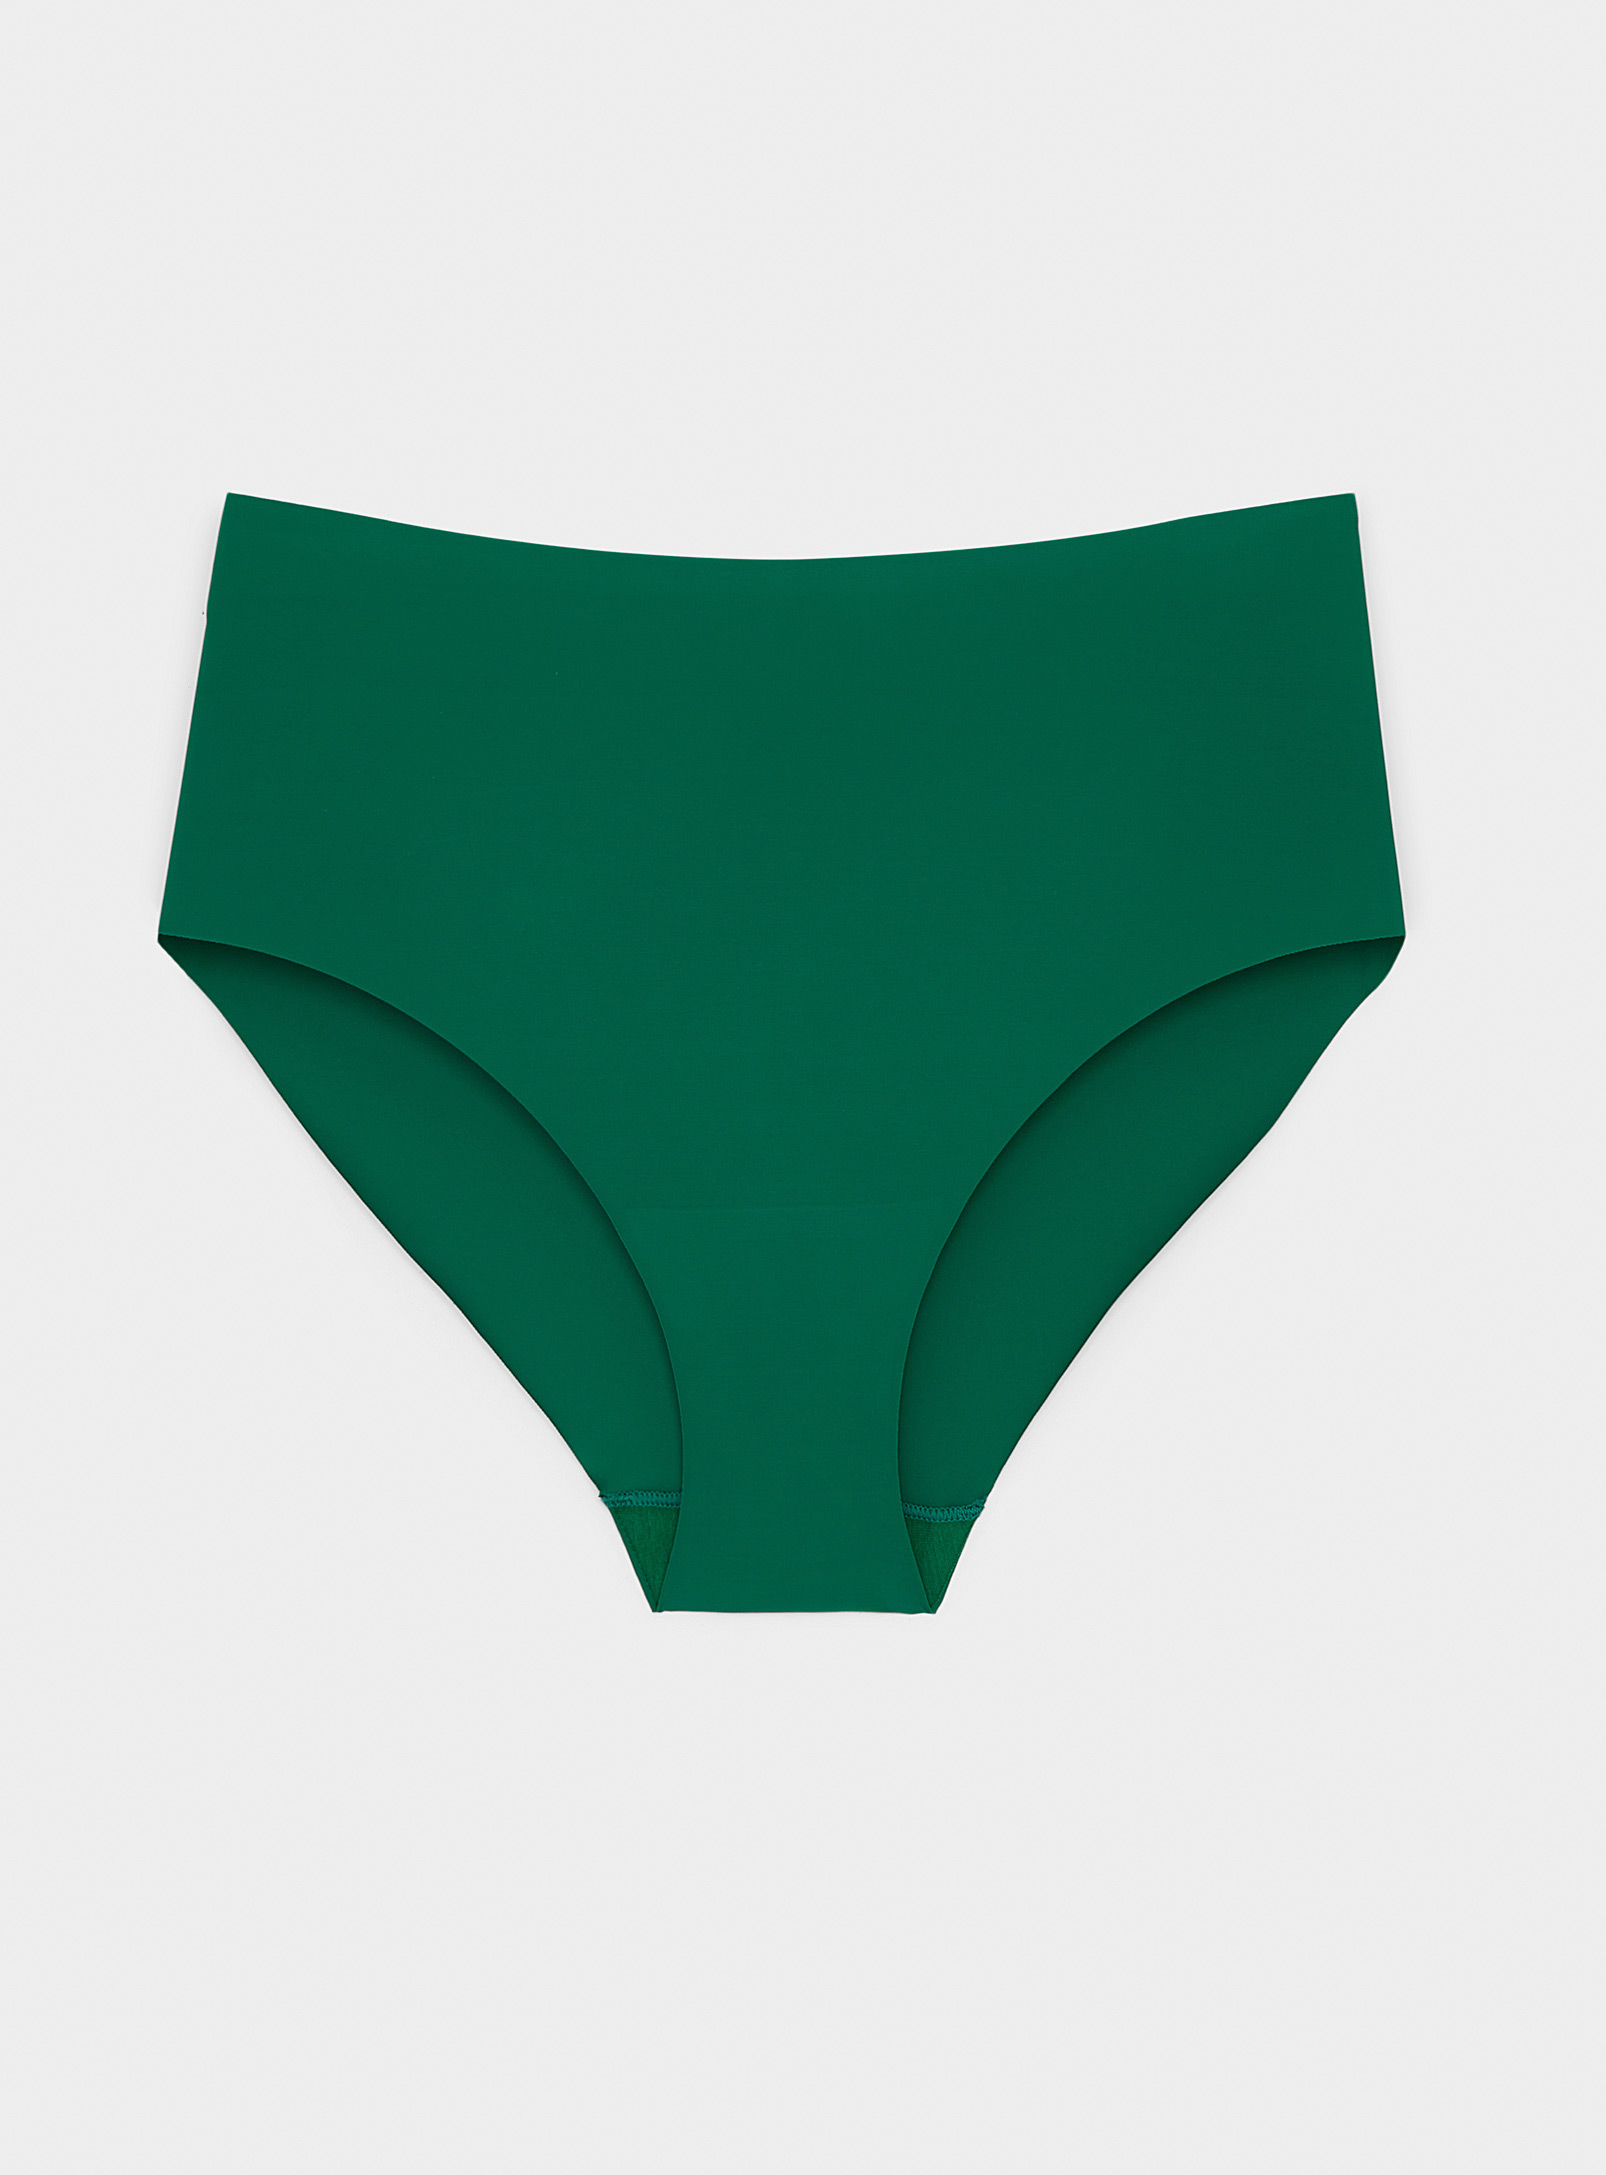 Miiyu Recycled Nylon High-waisted Laser-cut Panty In Kelly Green